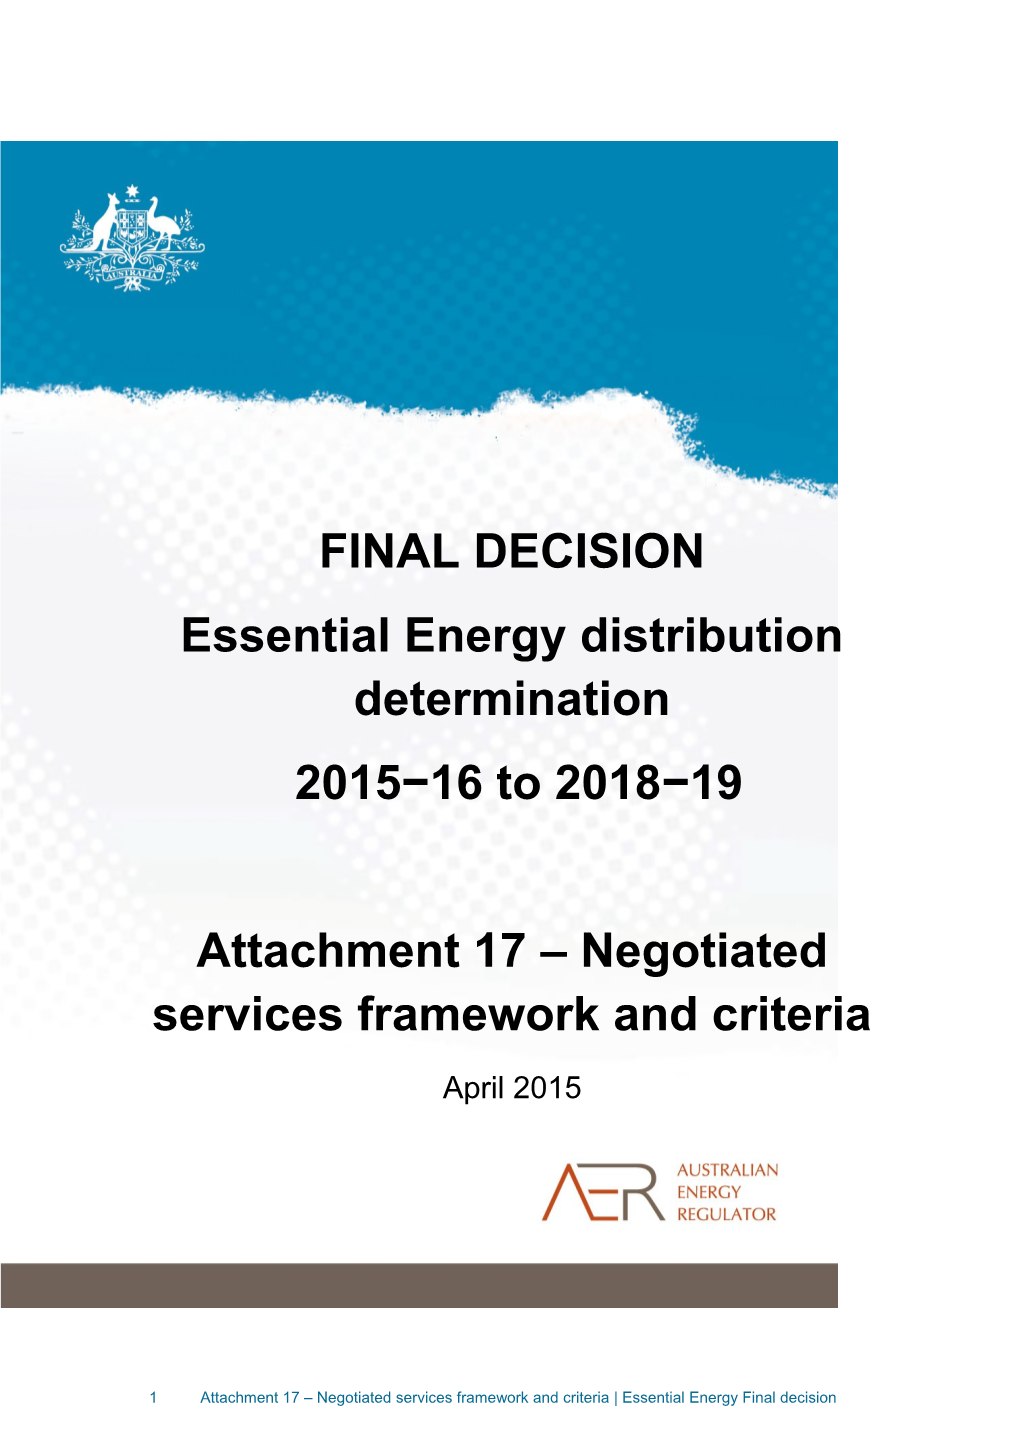 Attachment 17 Negotiated Services Framework and Criteria